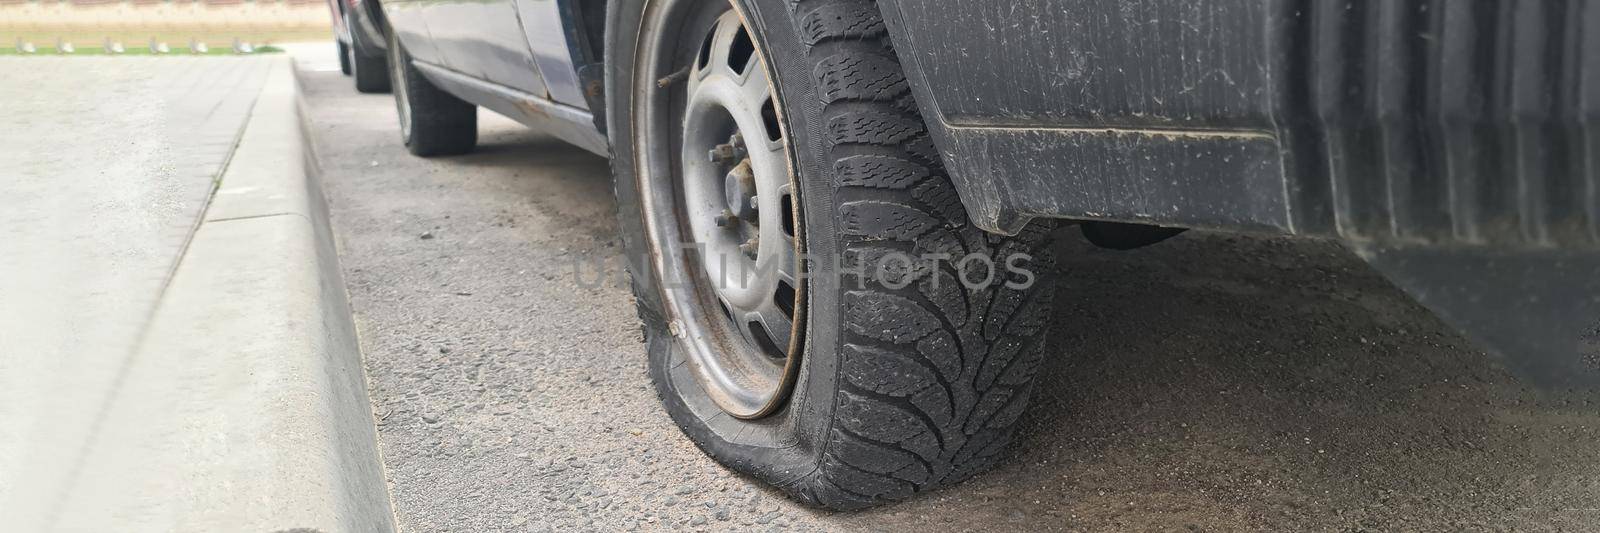 Car with flat tire standing near sidewalk closeup. Tire repair and maintenance concept